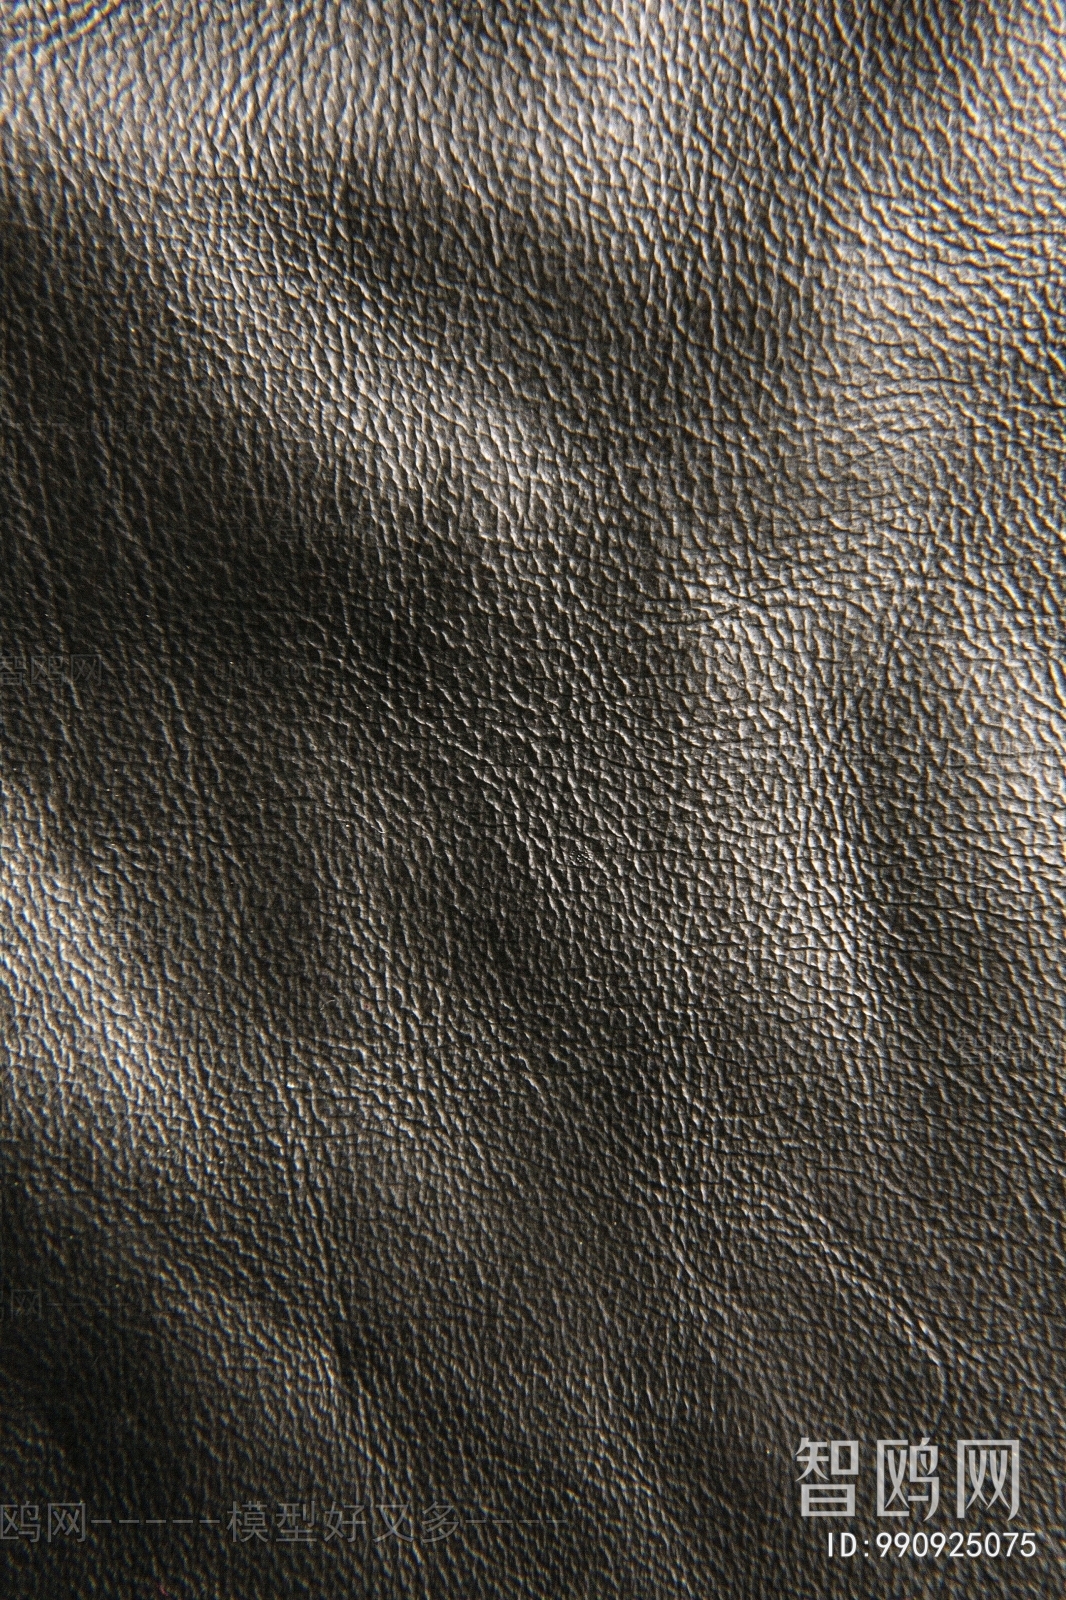 Rough Grain Leather